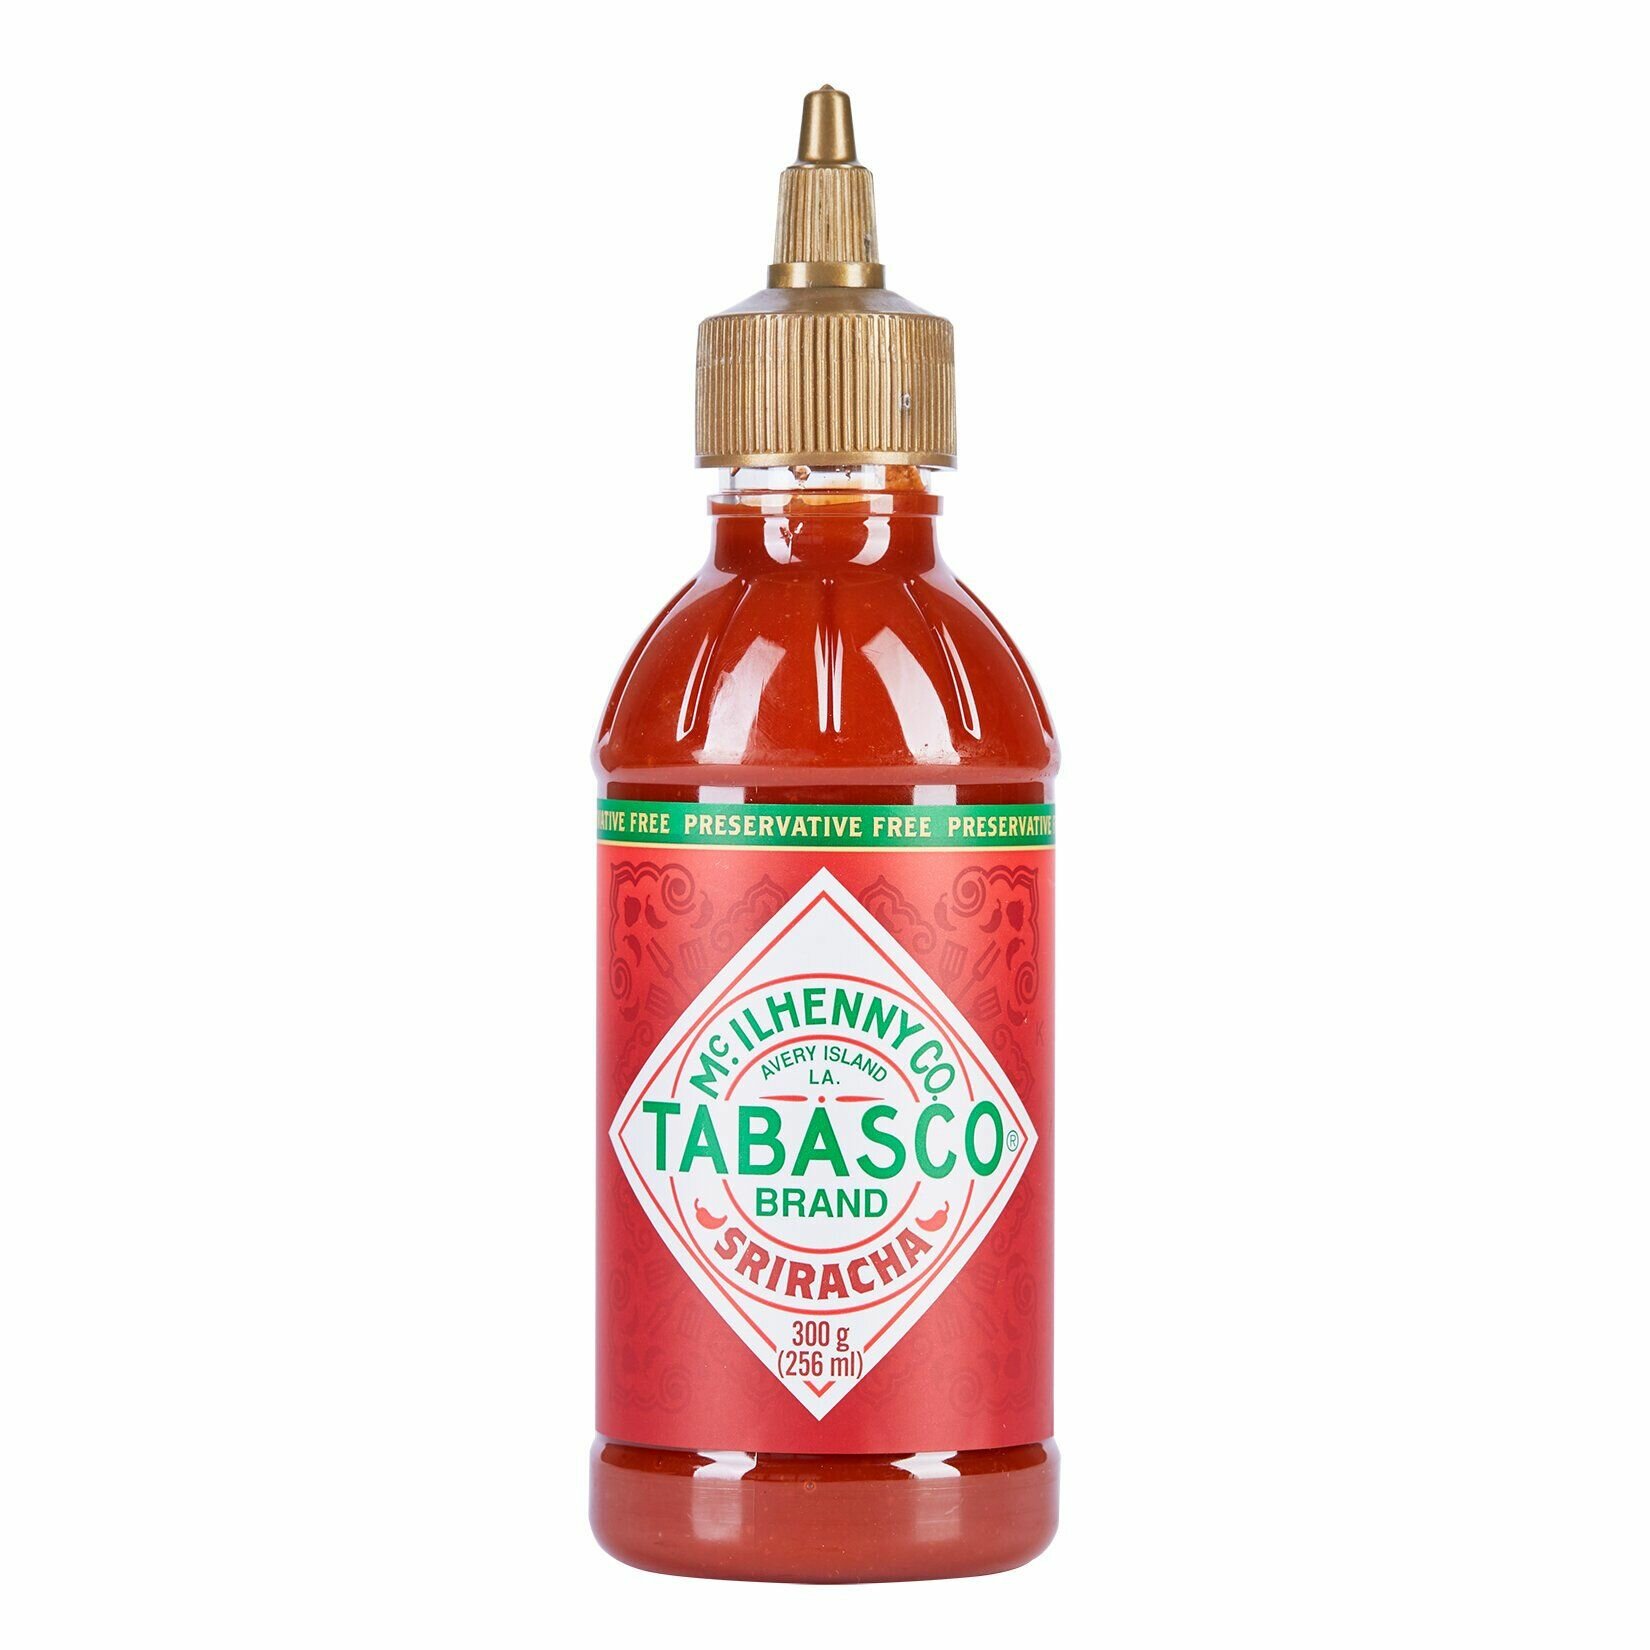 Tabasco Sriracha, США, 256 мл х 1шт